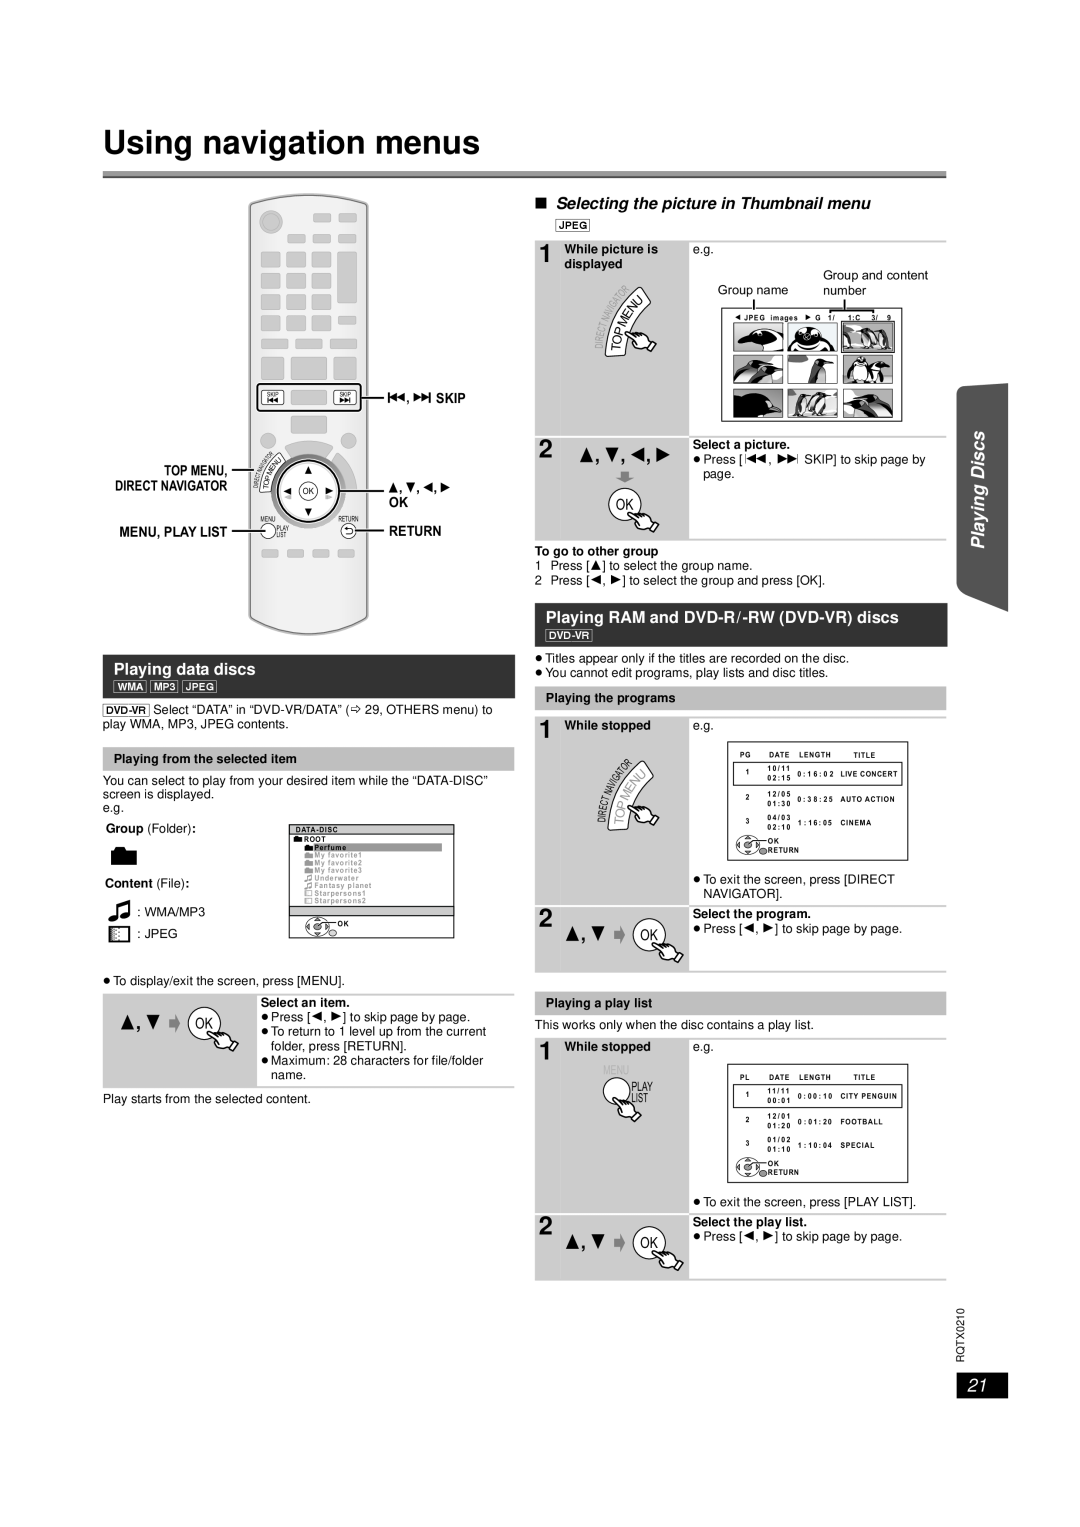 Panasonic SC-PT673 Using navigation menus, Playing data discs, Selecting the picture in Thumbnail menu, Other, Top Menu 